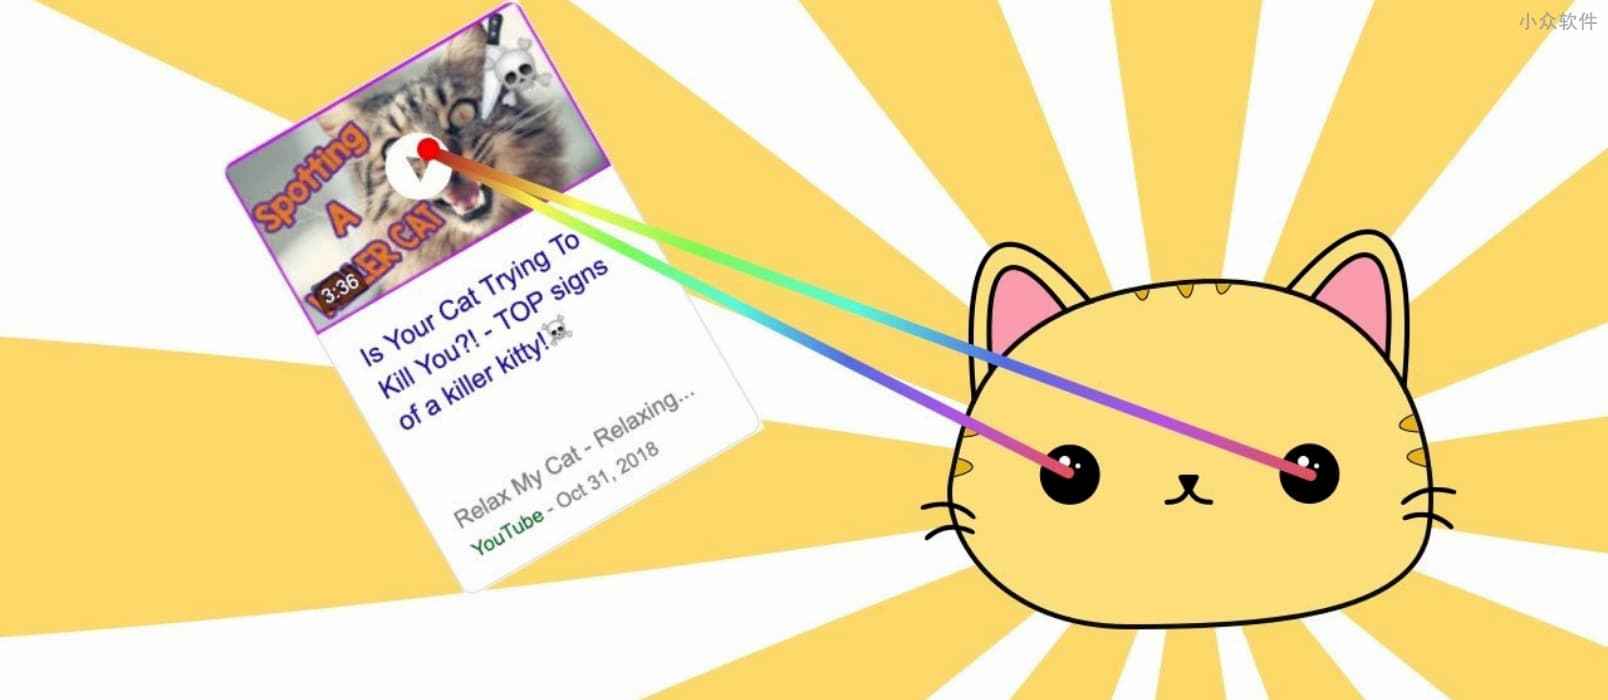 Laser Cat - 好无聊啊，激光猫，吃掉它[Chrome]